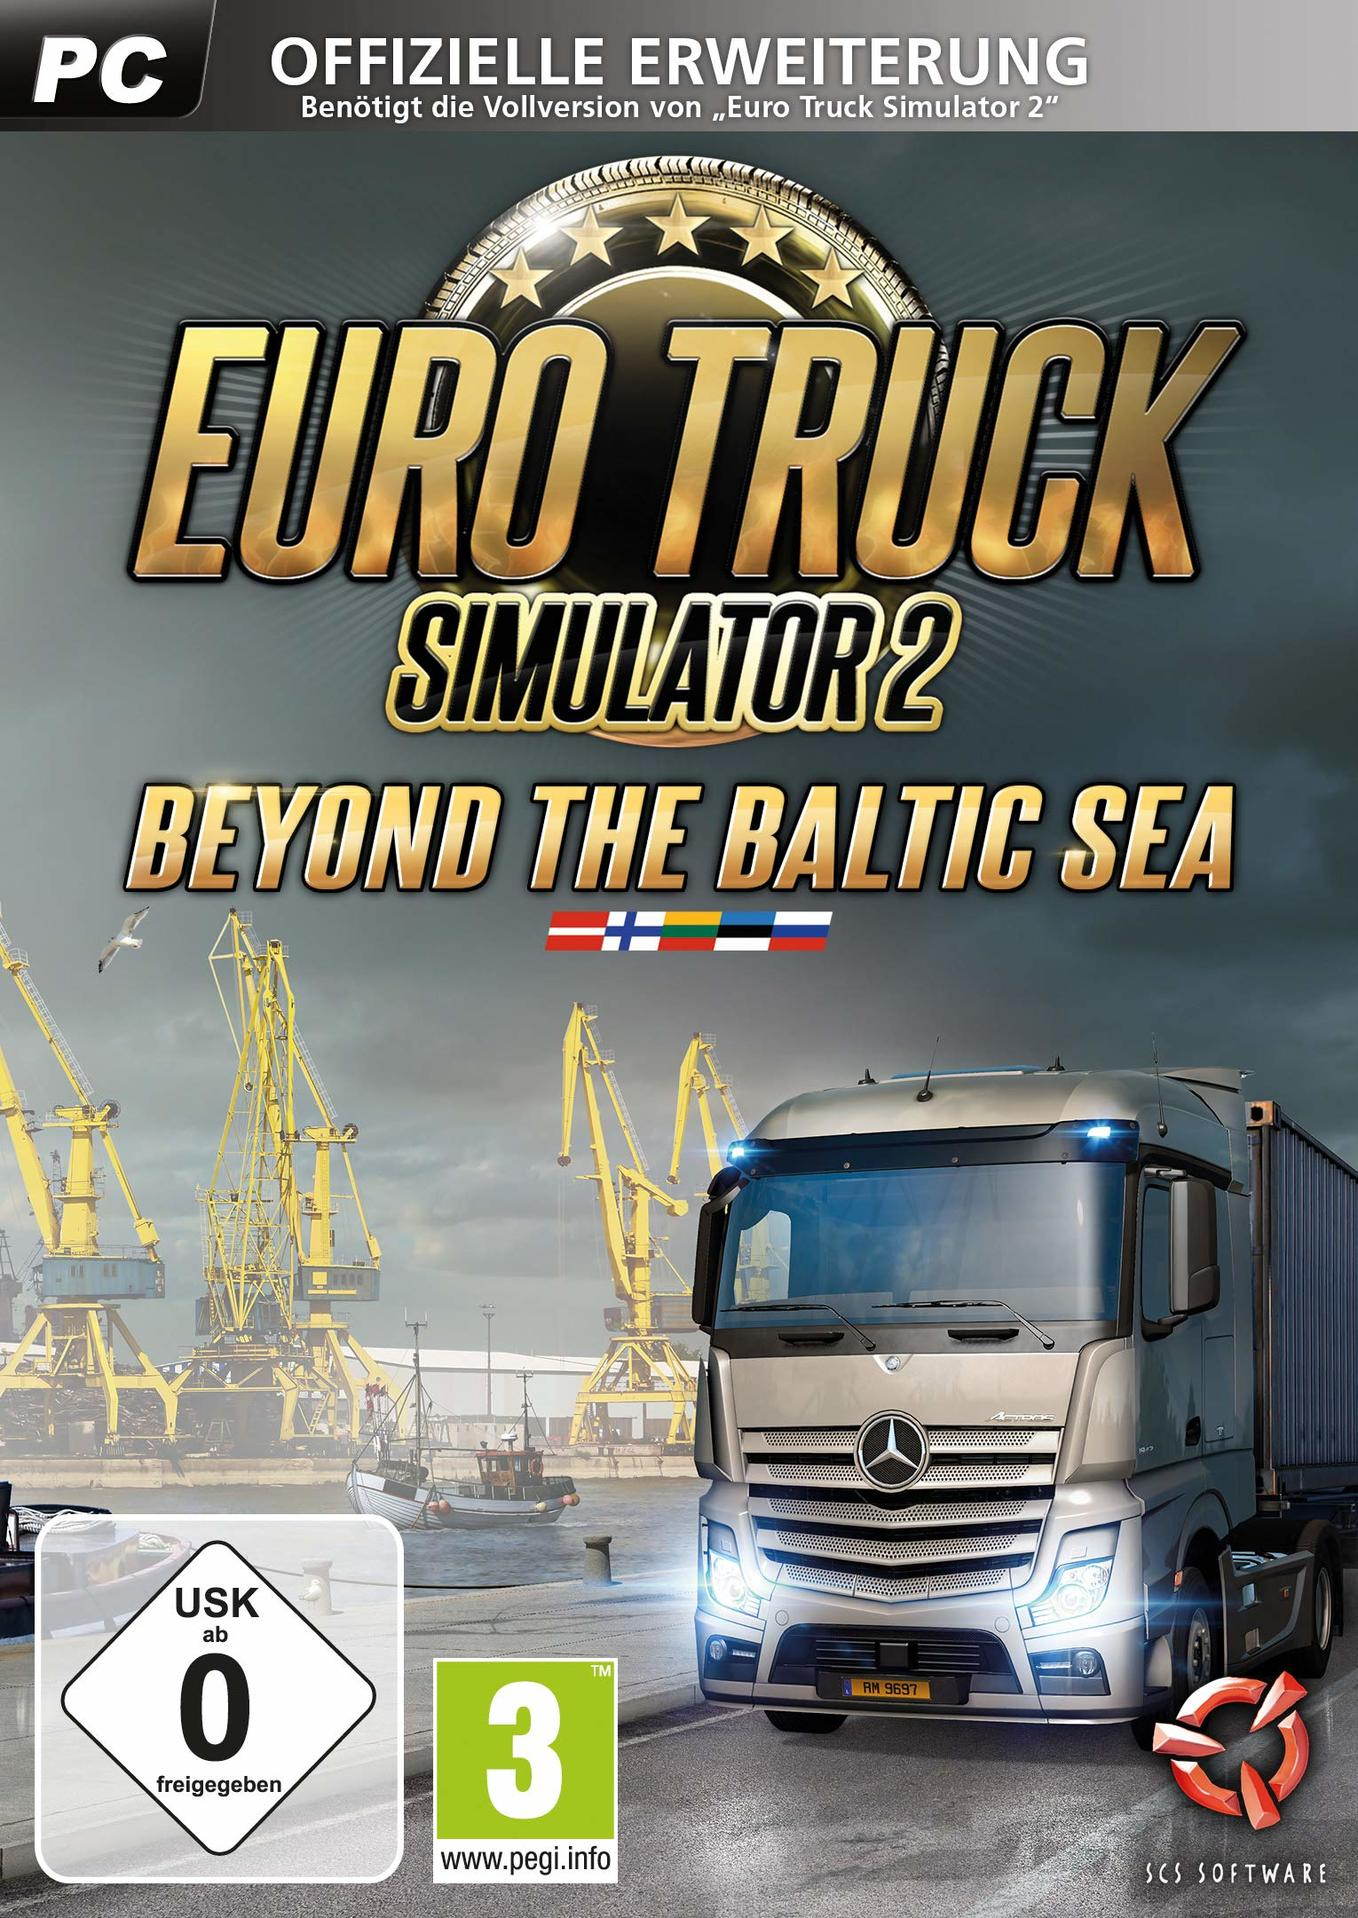 Simulator - 2: Sea [PC] DLC Baltic Beyond Truck the Euro